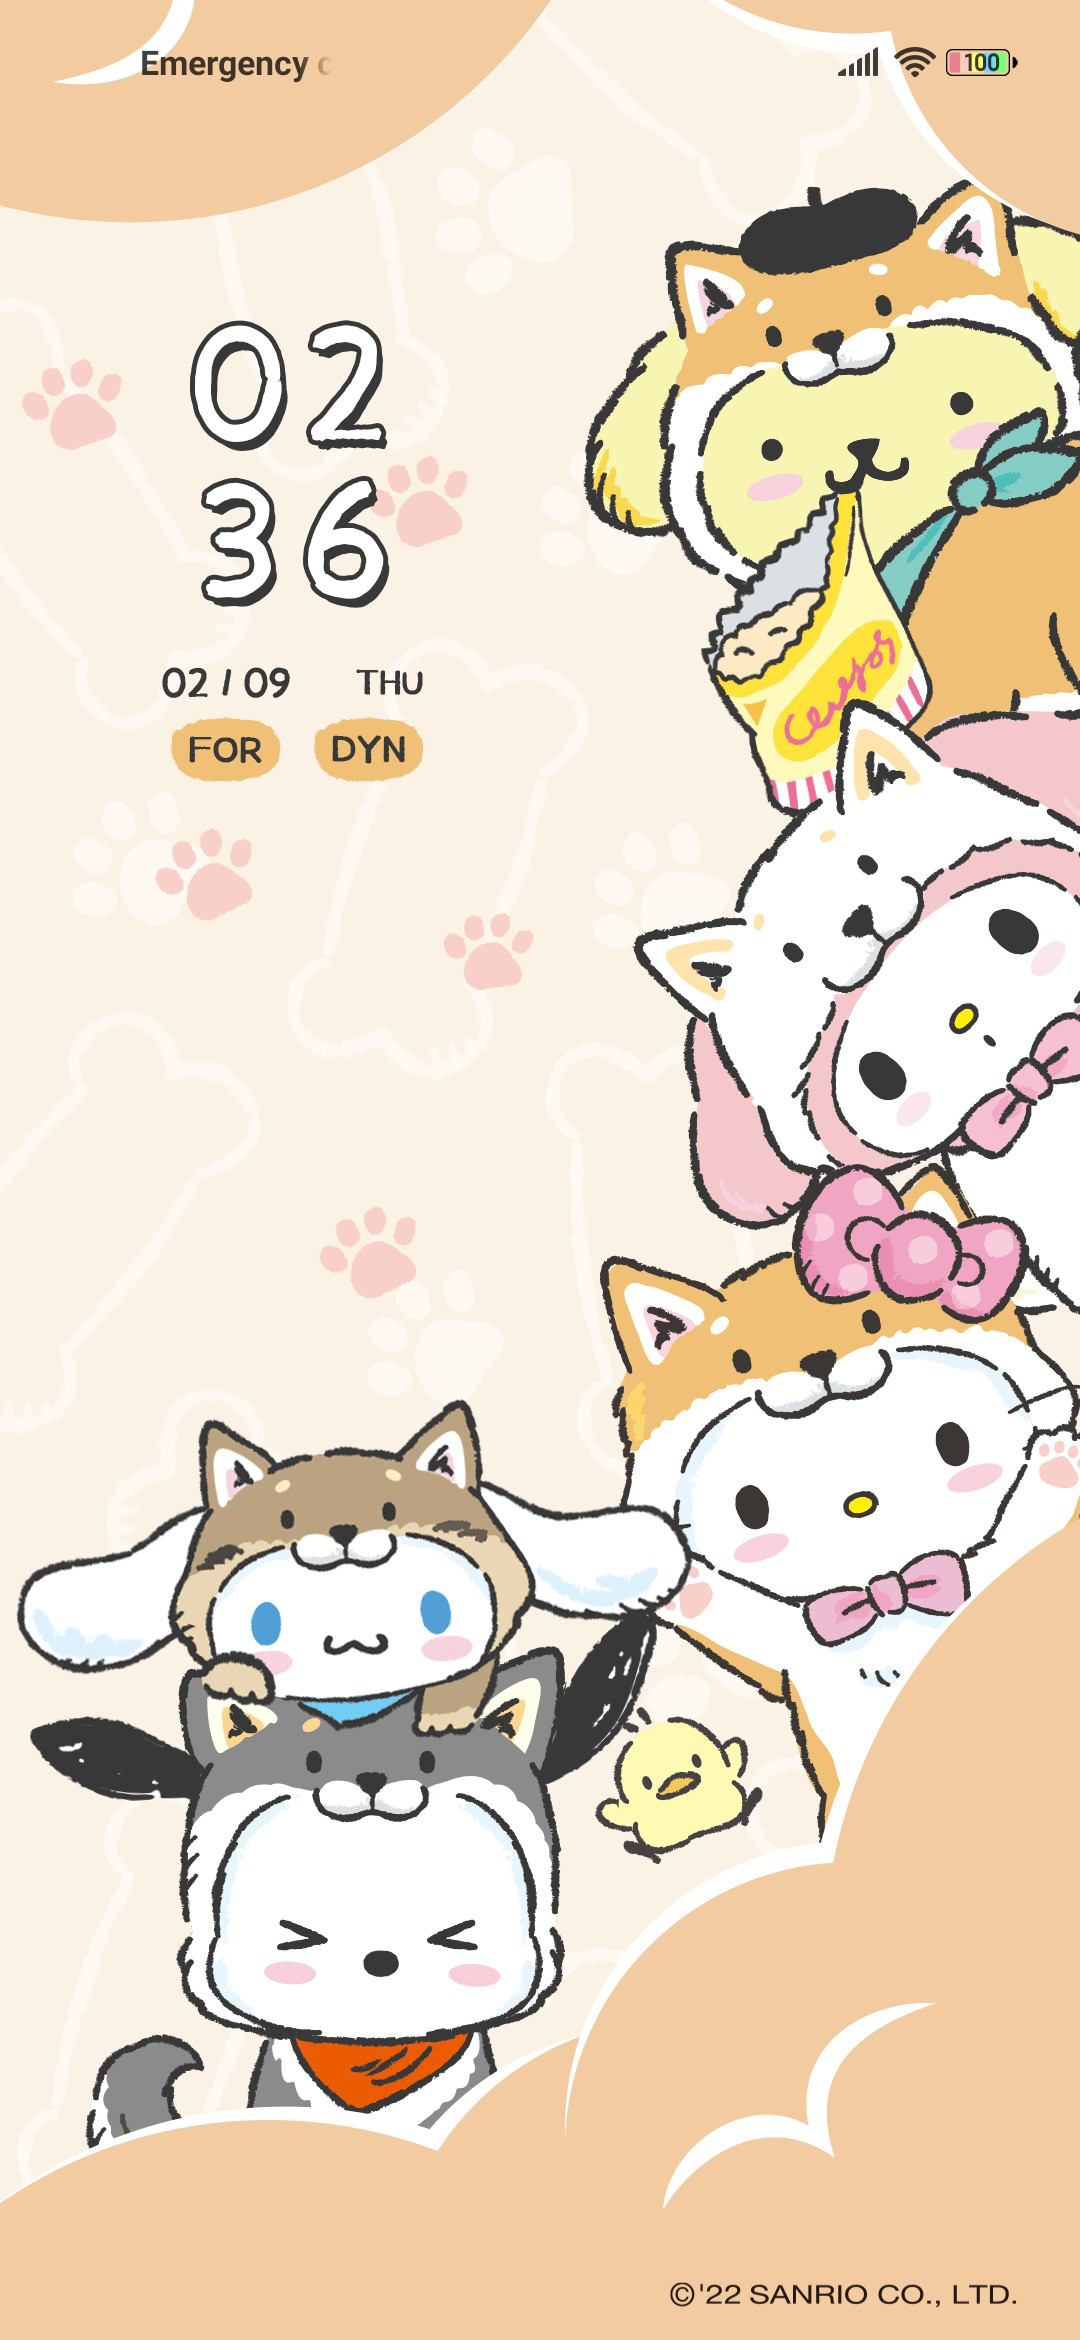 100+] Cute Sanrio Wallpapers